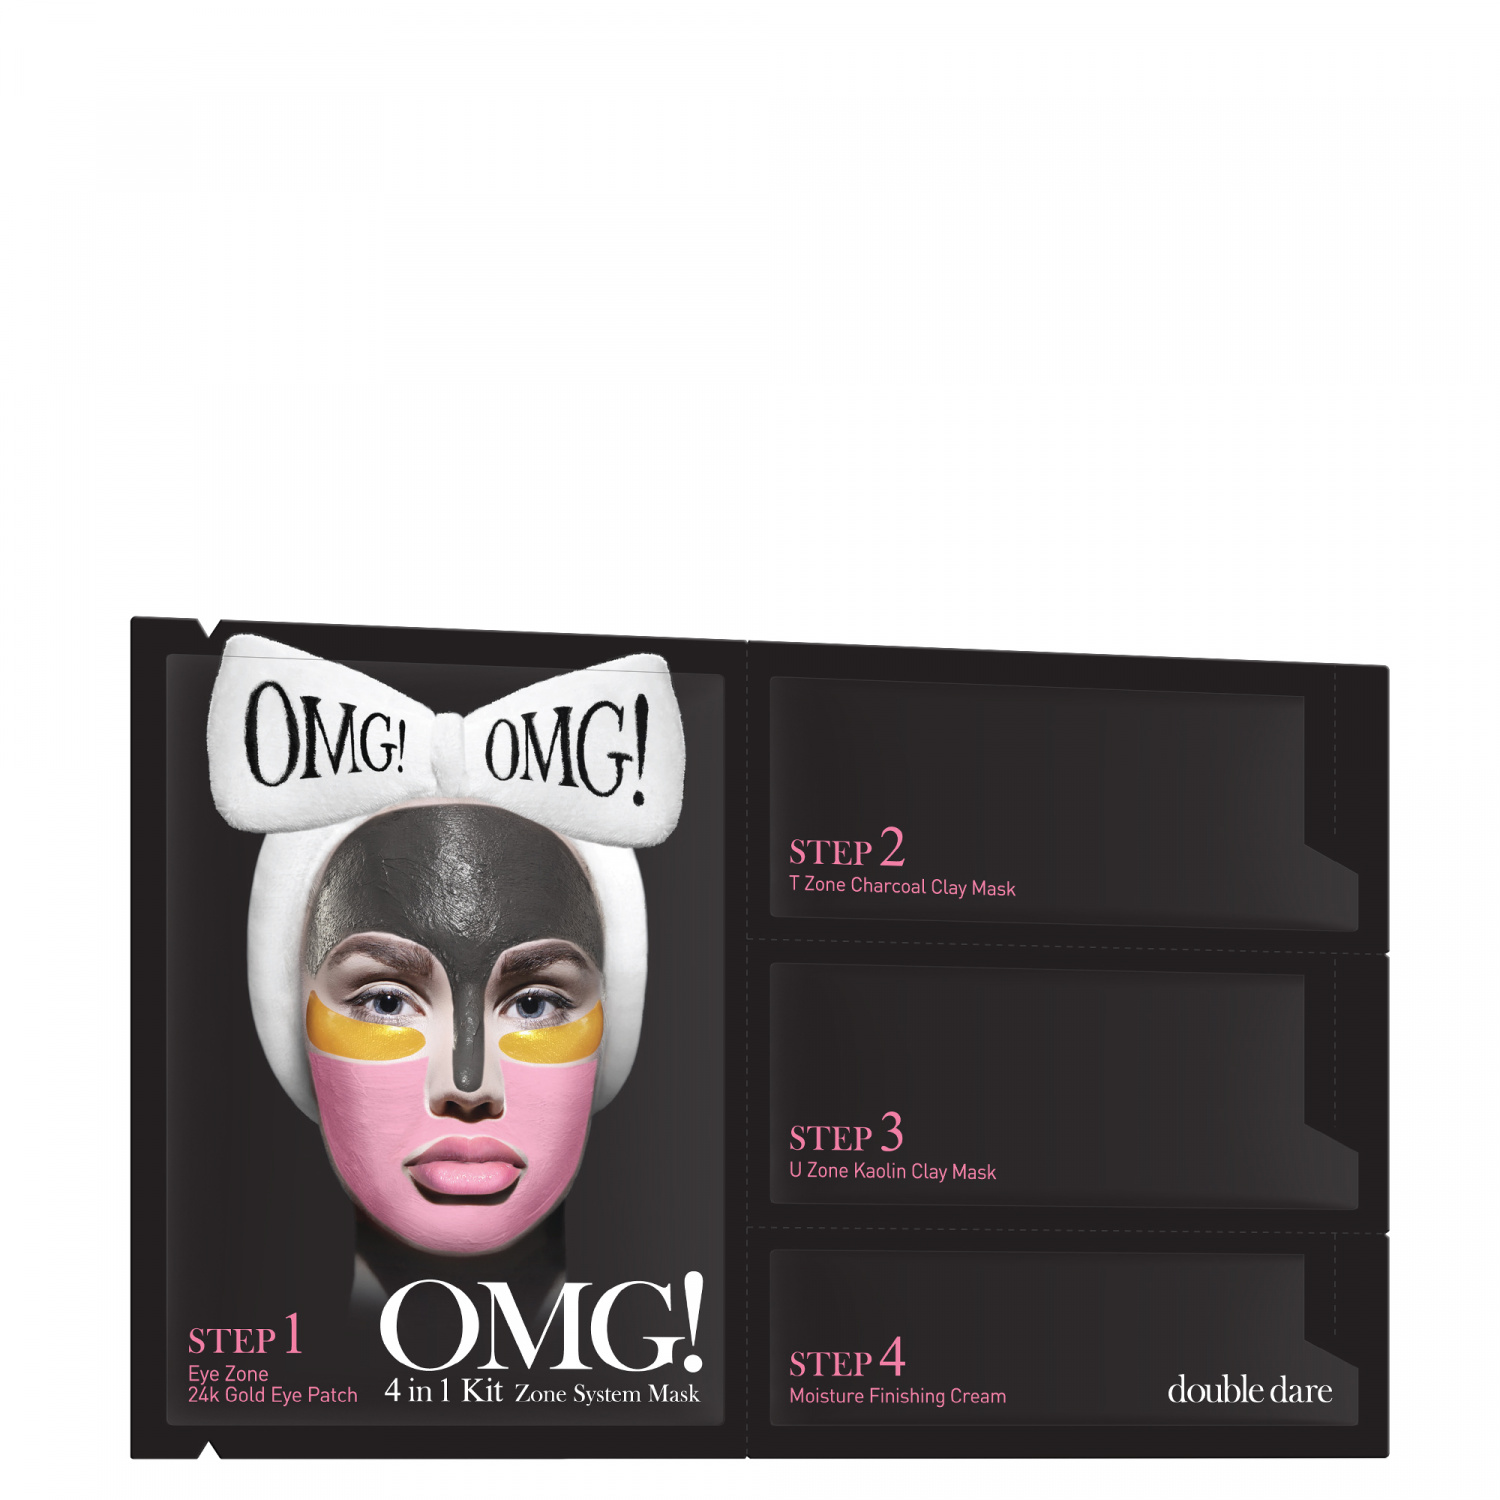 Double Dare OMG! 4IN1 KIT Zone System Mask - интернет-магазин профессиональной косметики Spadream, изображение 40697